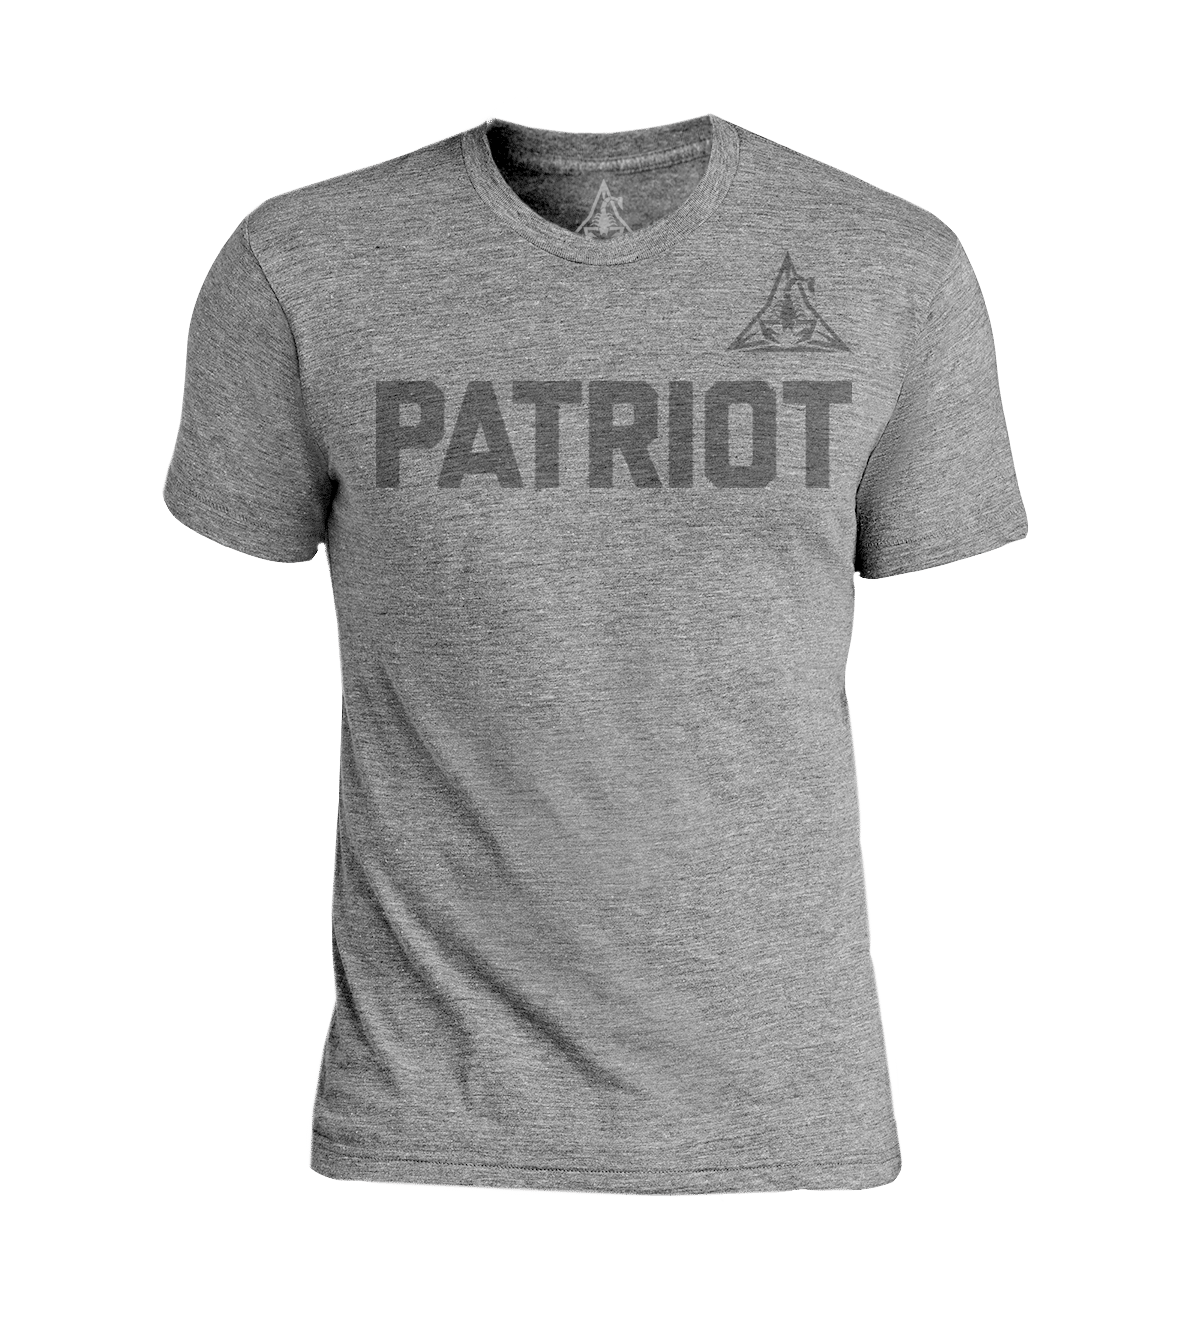 Men's Patriot T-Shirt, Men's Patriot T Shirt, patriotic t shirts, gray